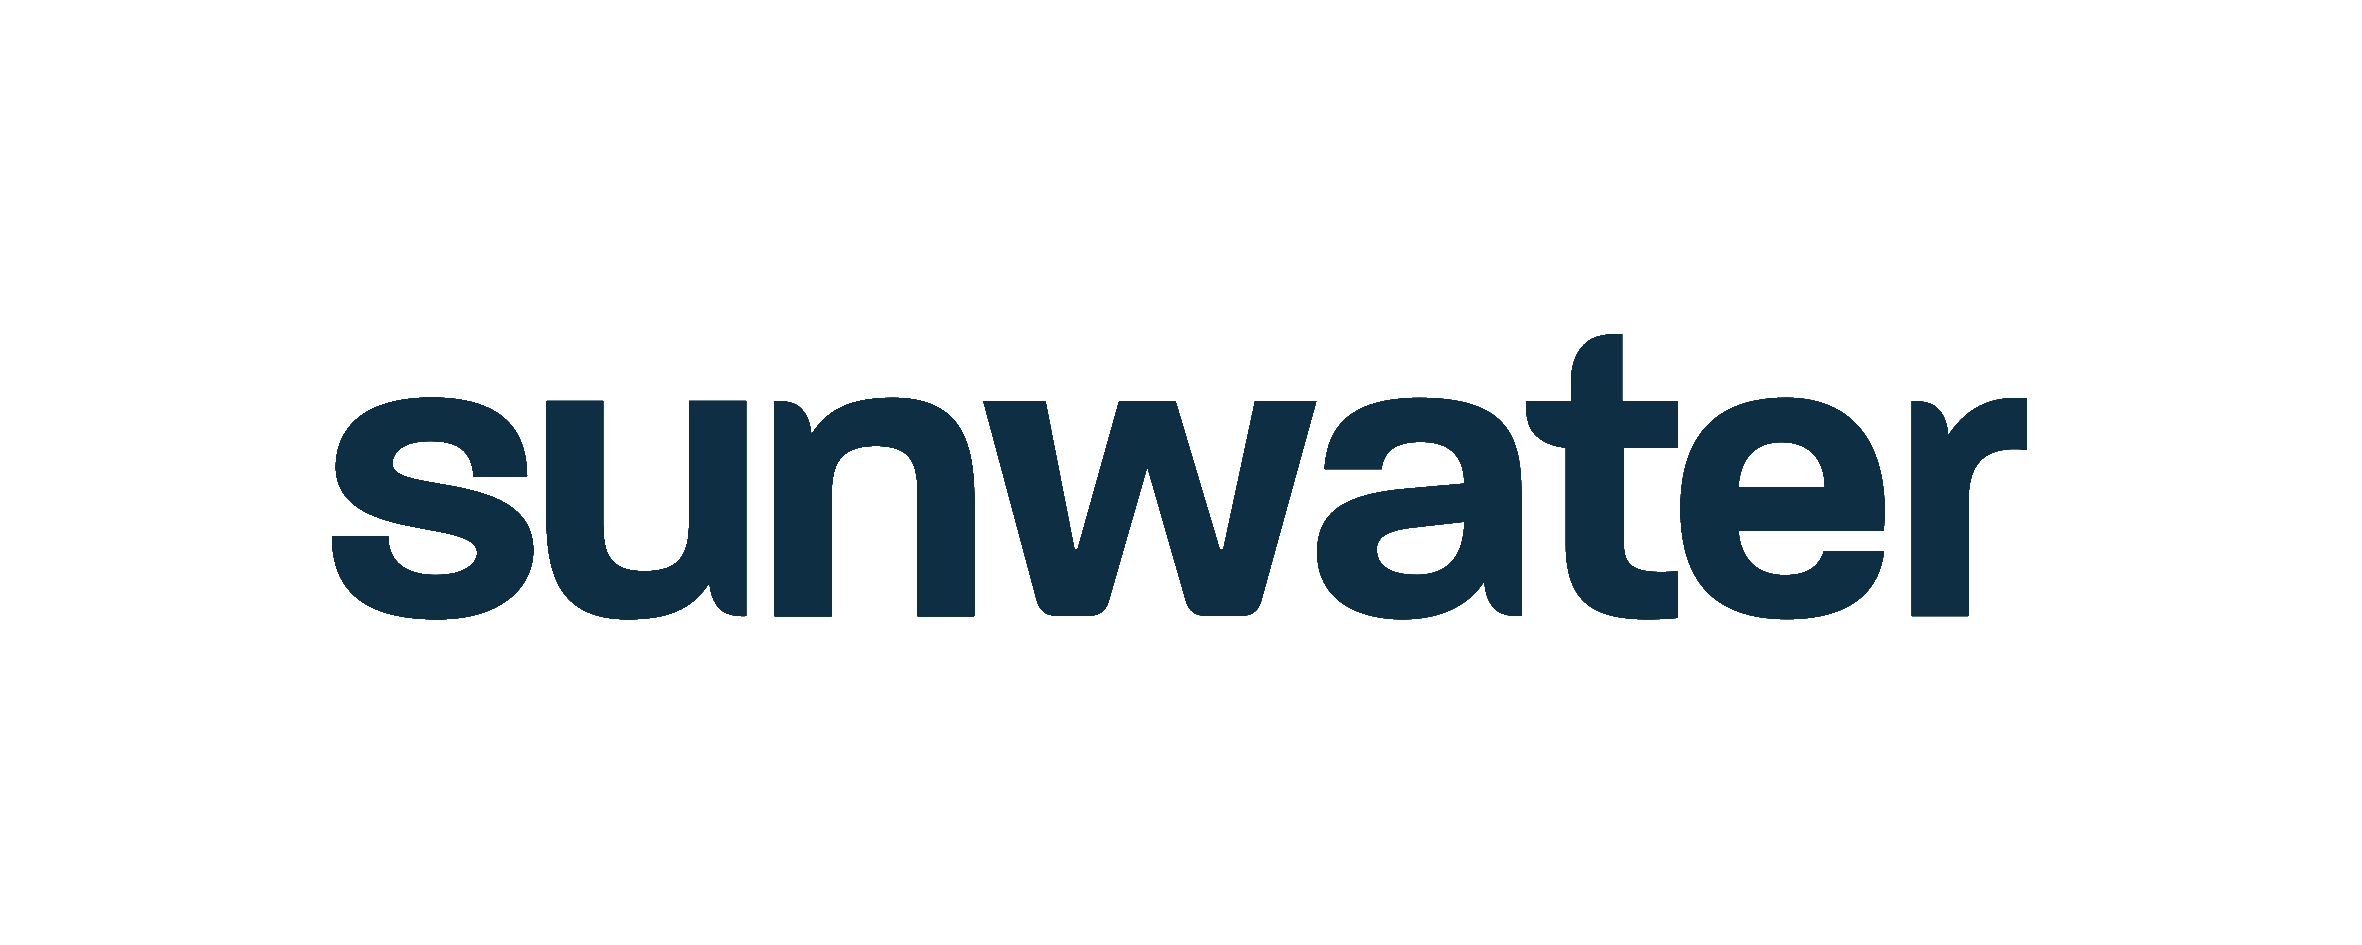 Sunwater_logo.png